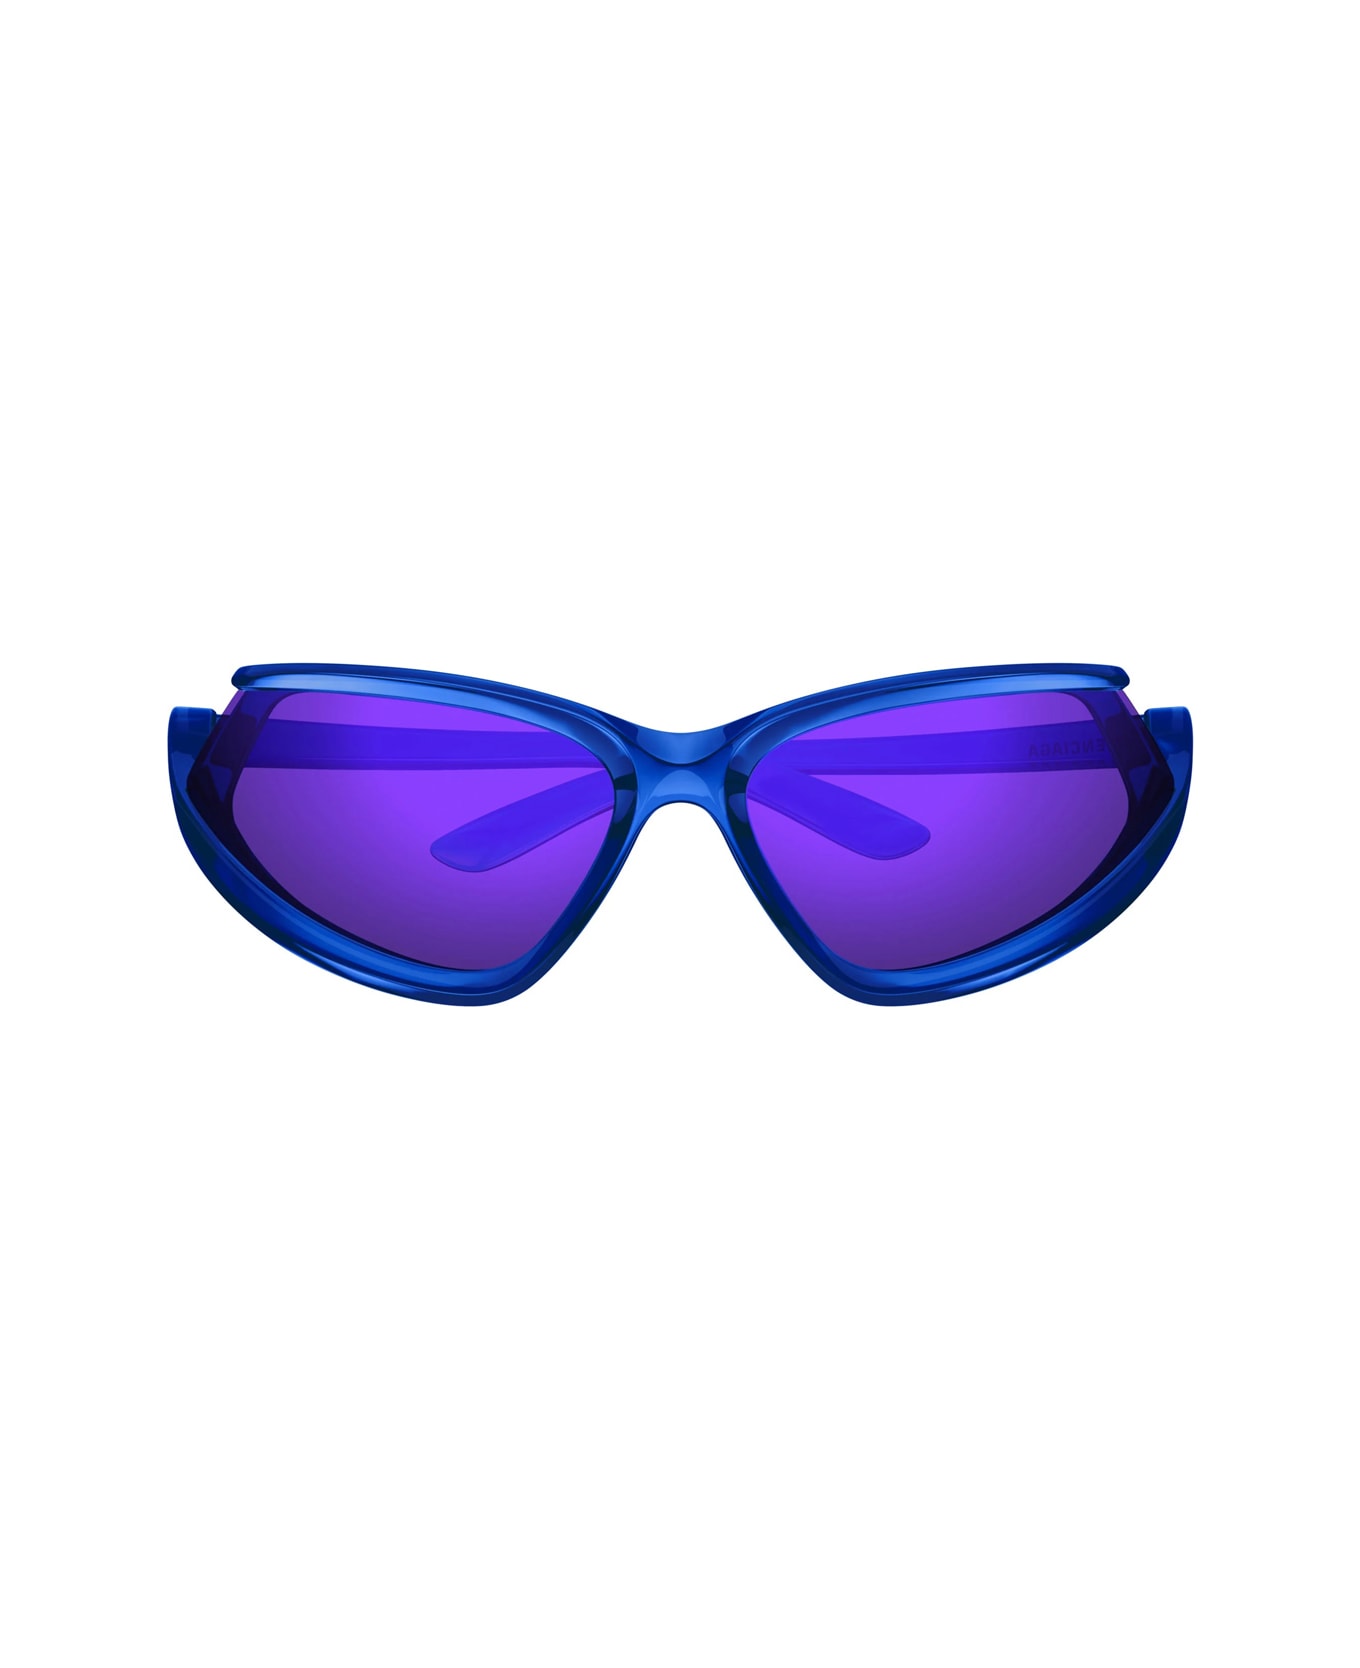 Balenciaga Eyewear Bb0289s Sunglasses - 004 BLUE BLUE VIOLET